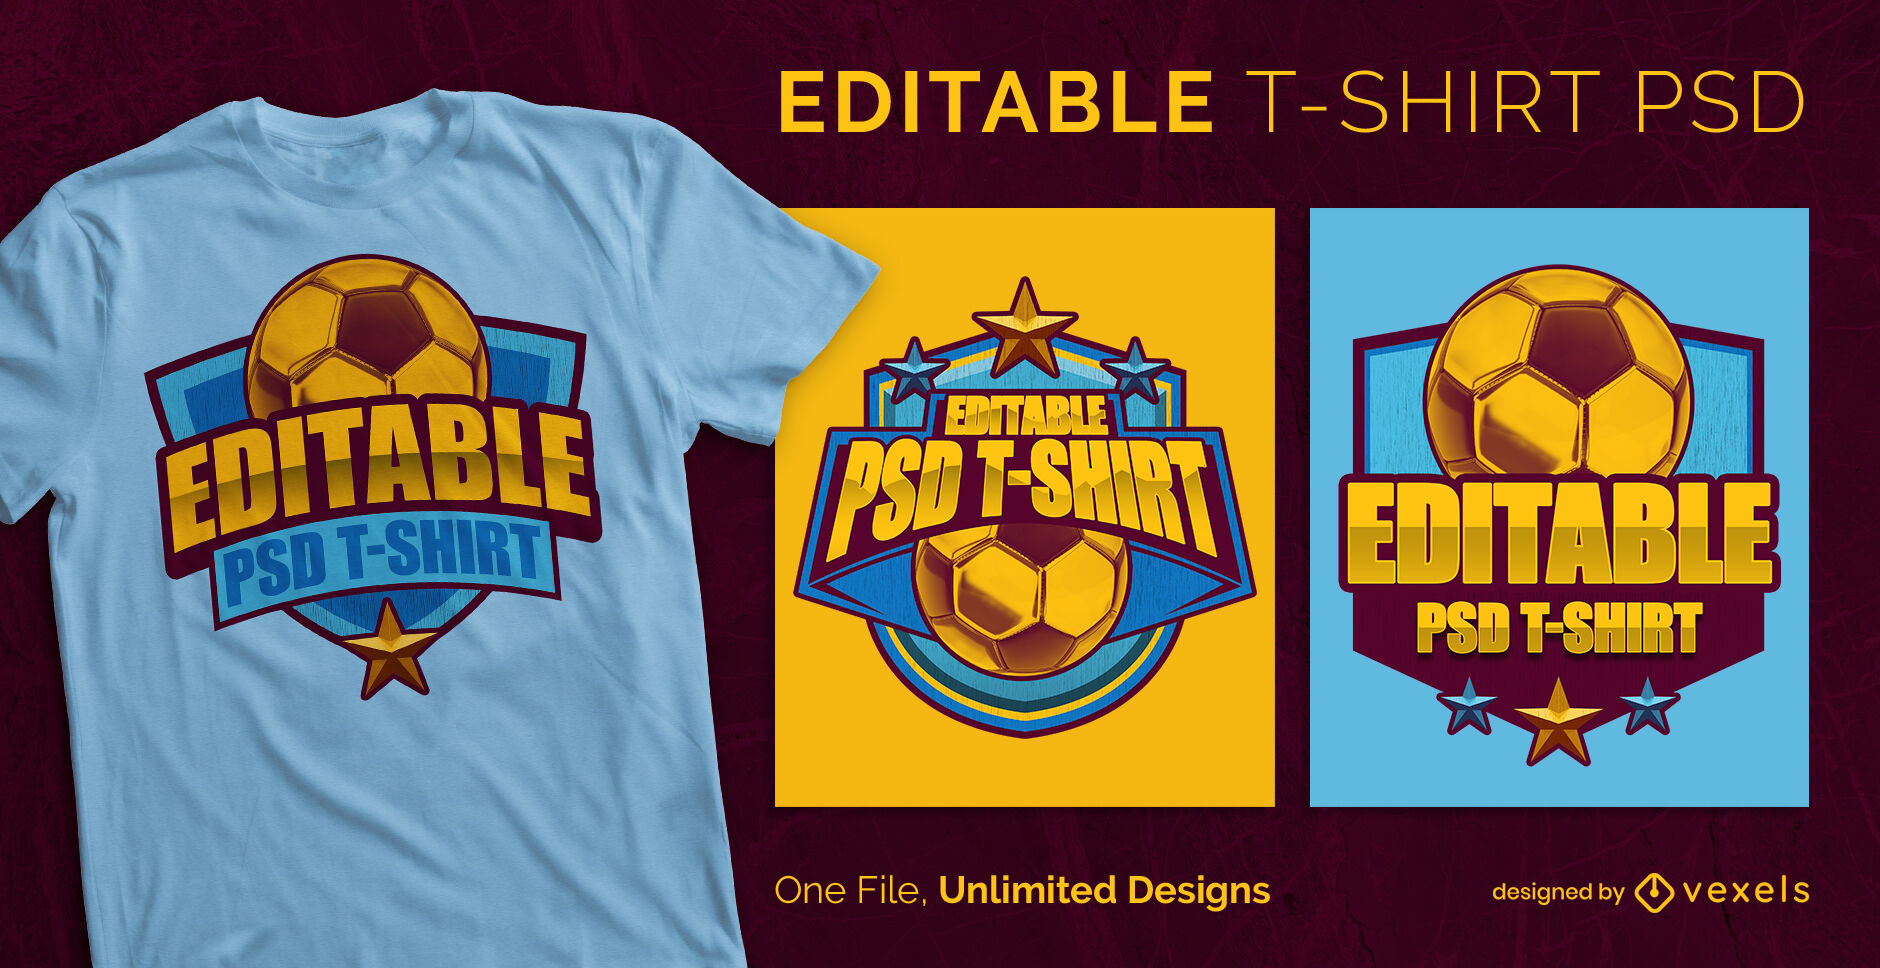 Soccer trophies Qatar editable PSD t-shirt